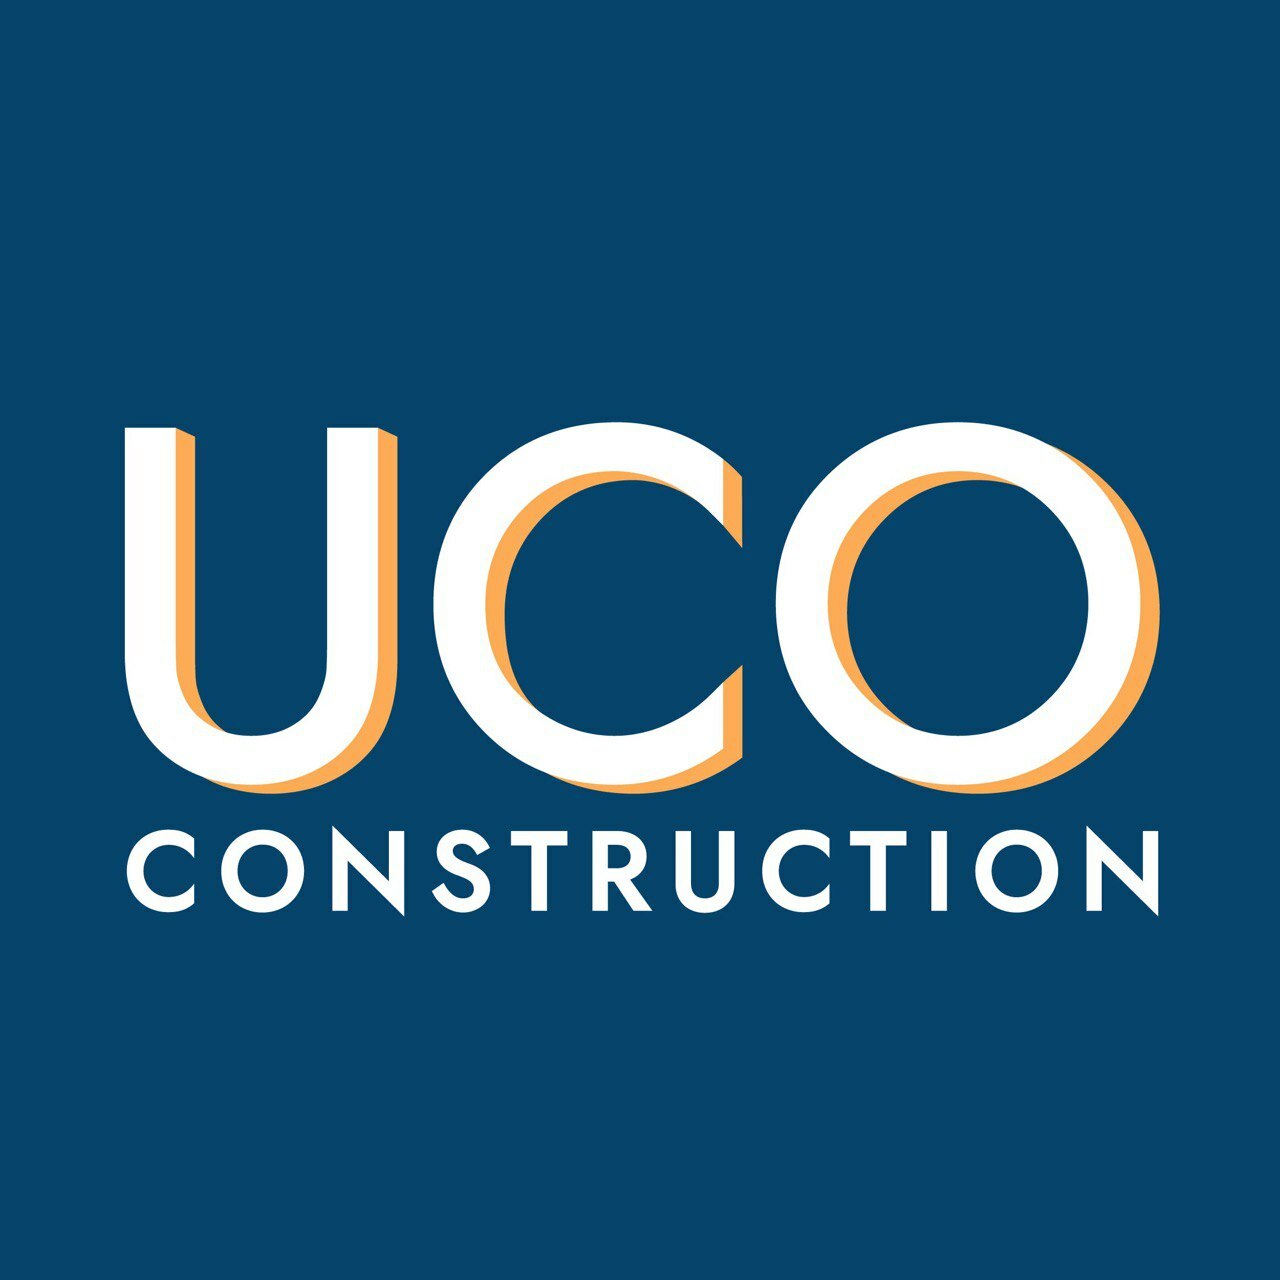 UCO CONSTRUCTION GROUP's logo